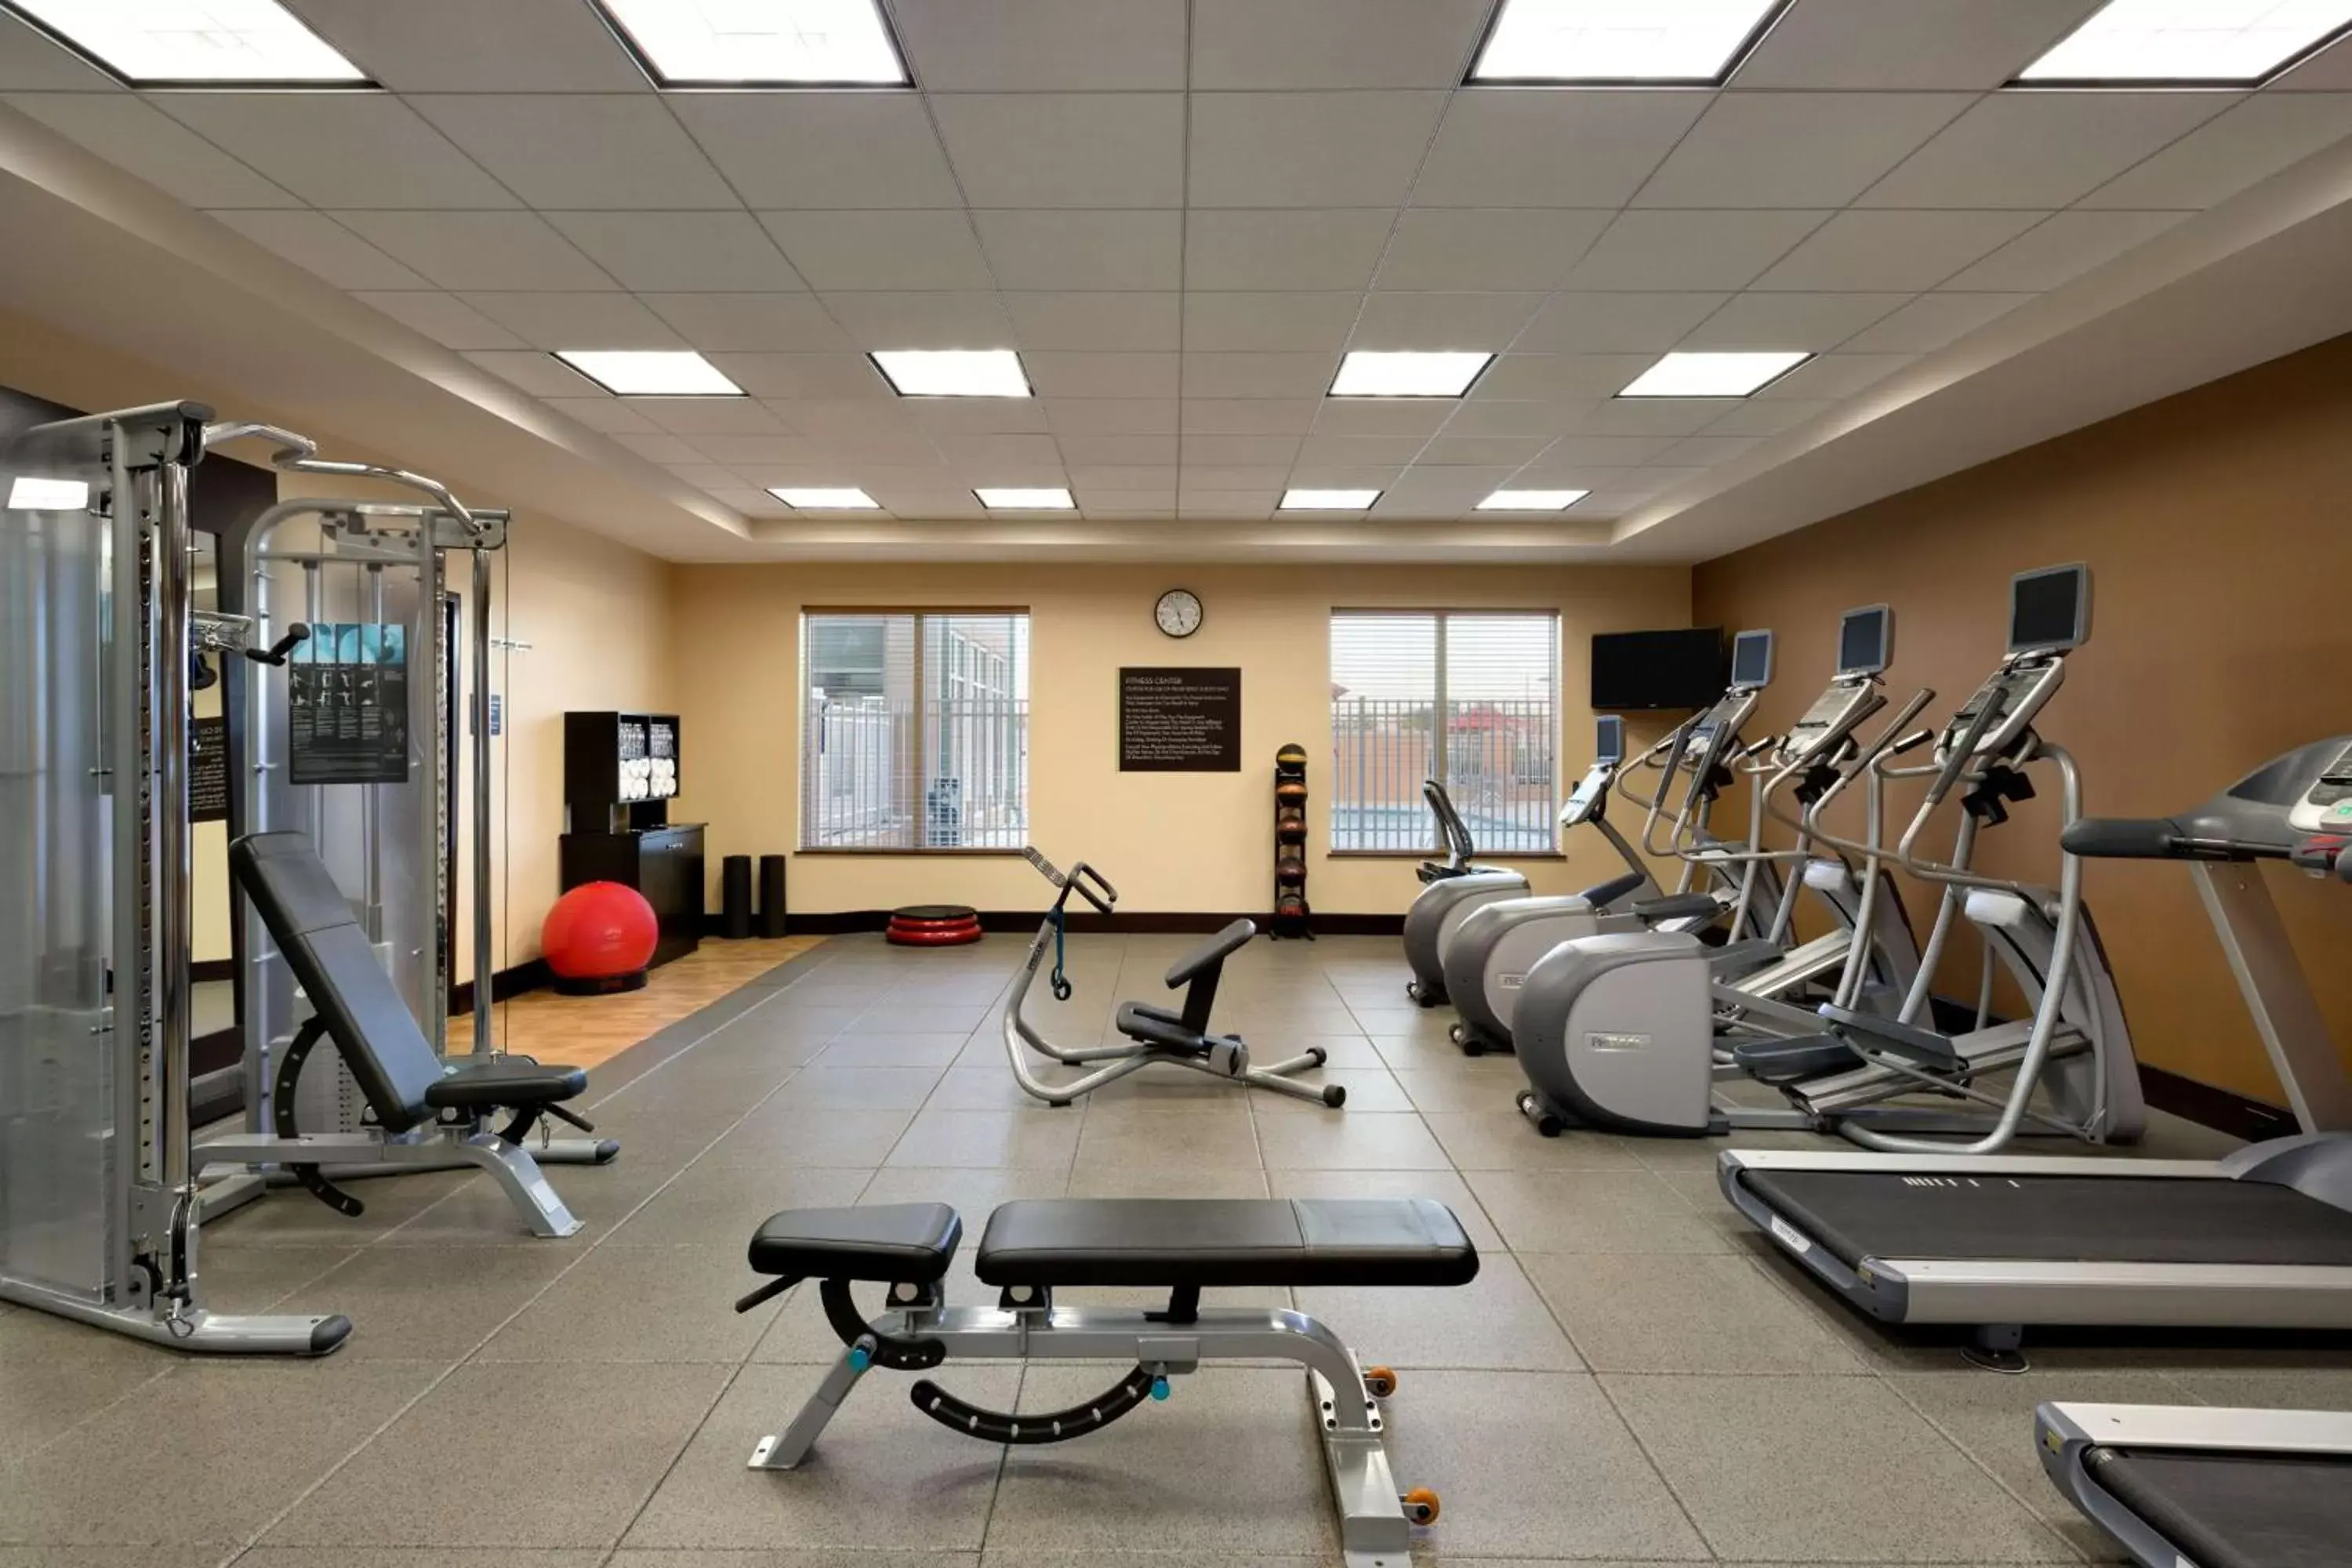 Fitness centre/facilities, Fitness Center/Facilities in Hilton Garden Inn Houston NW America Plaza